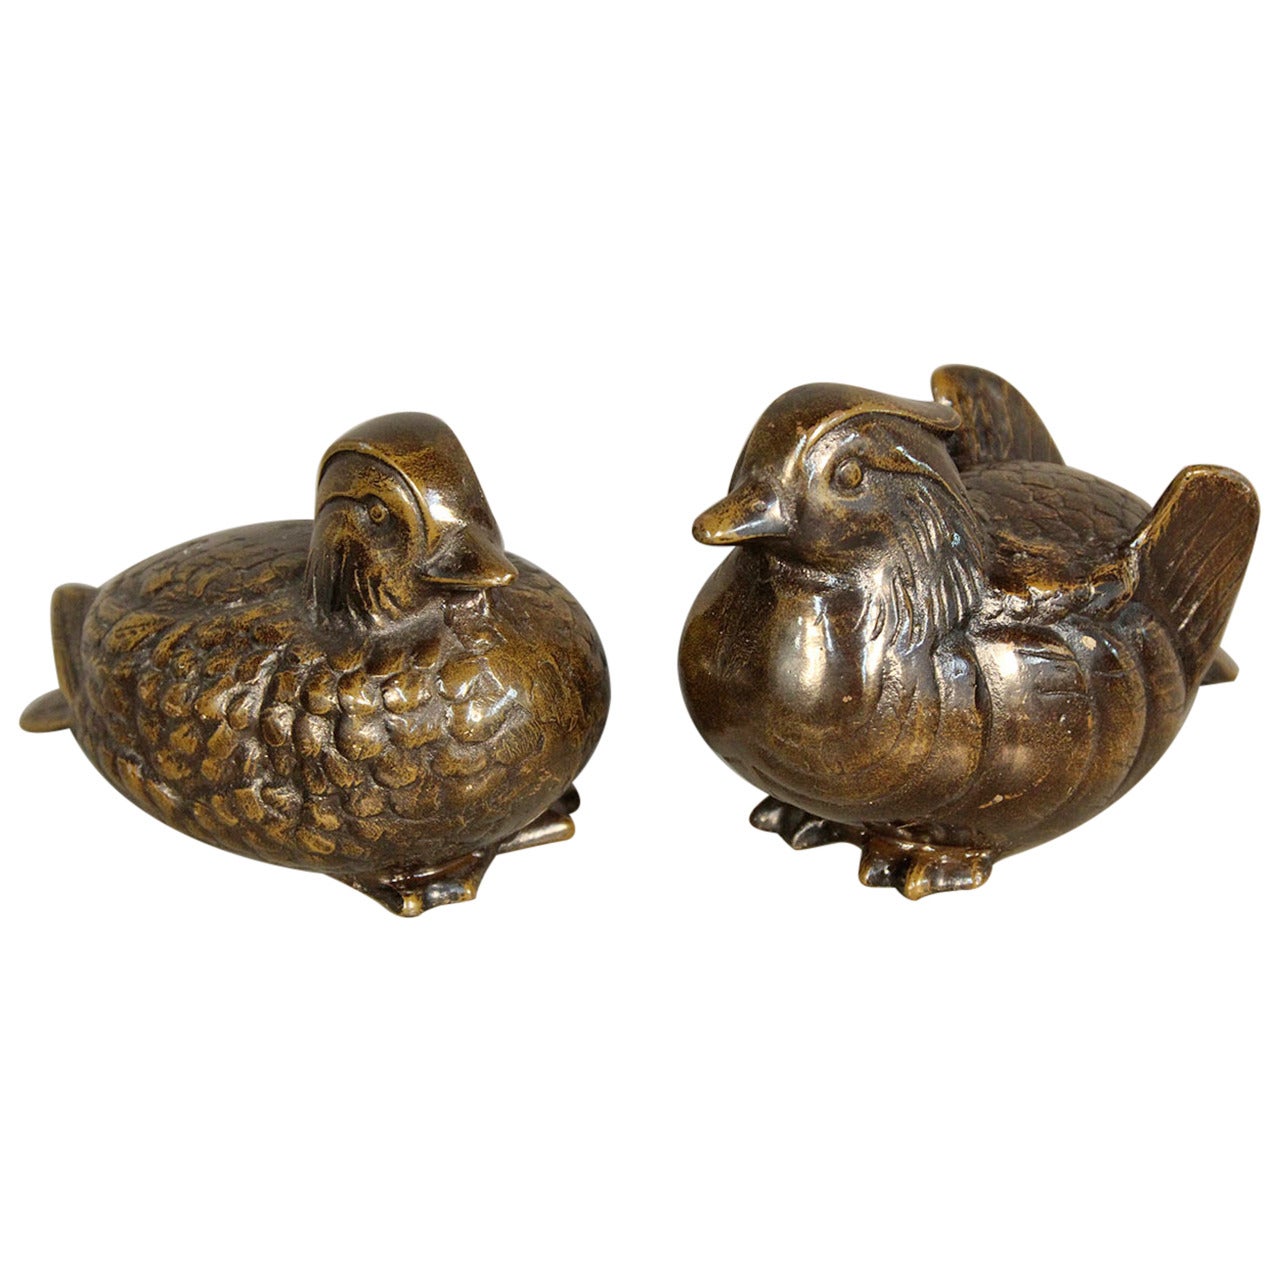 Pair of Mandarin Duck Bookends or Sculptures